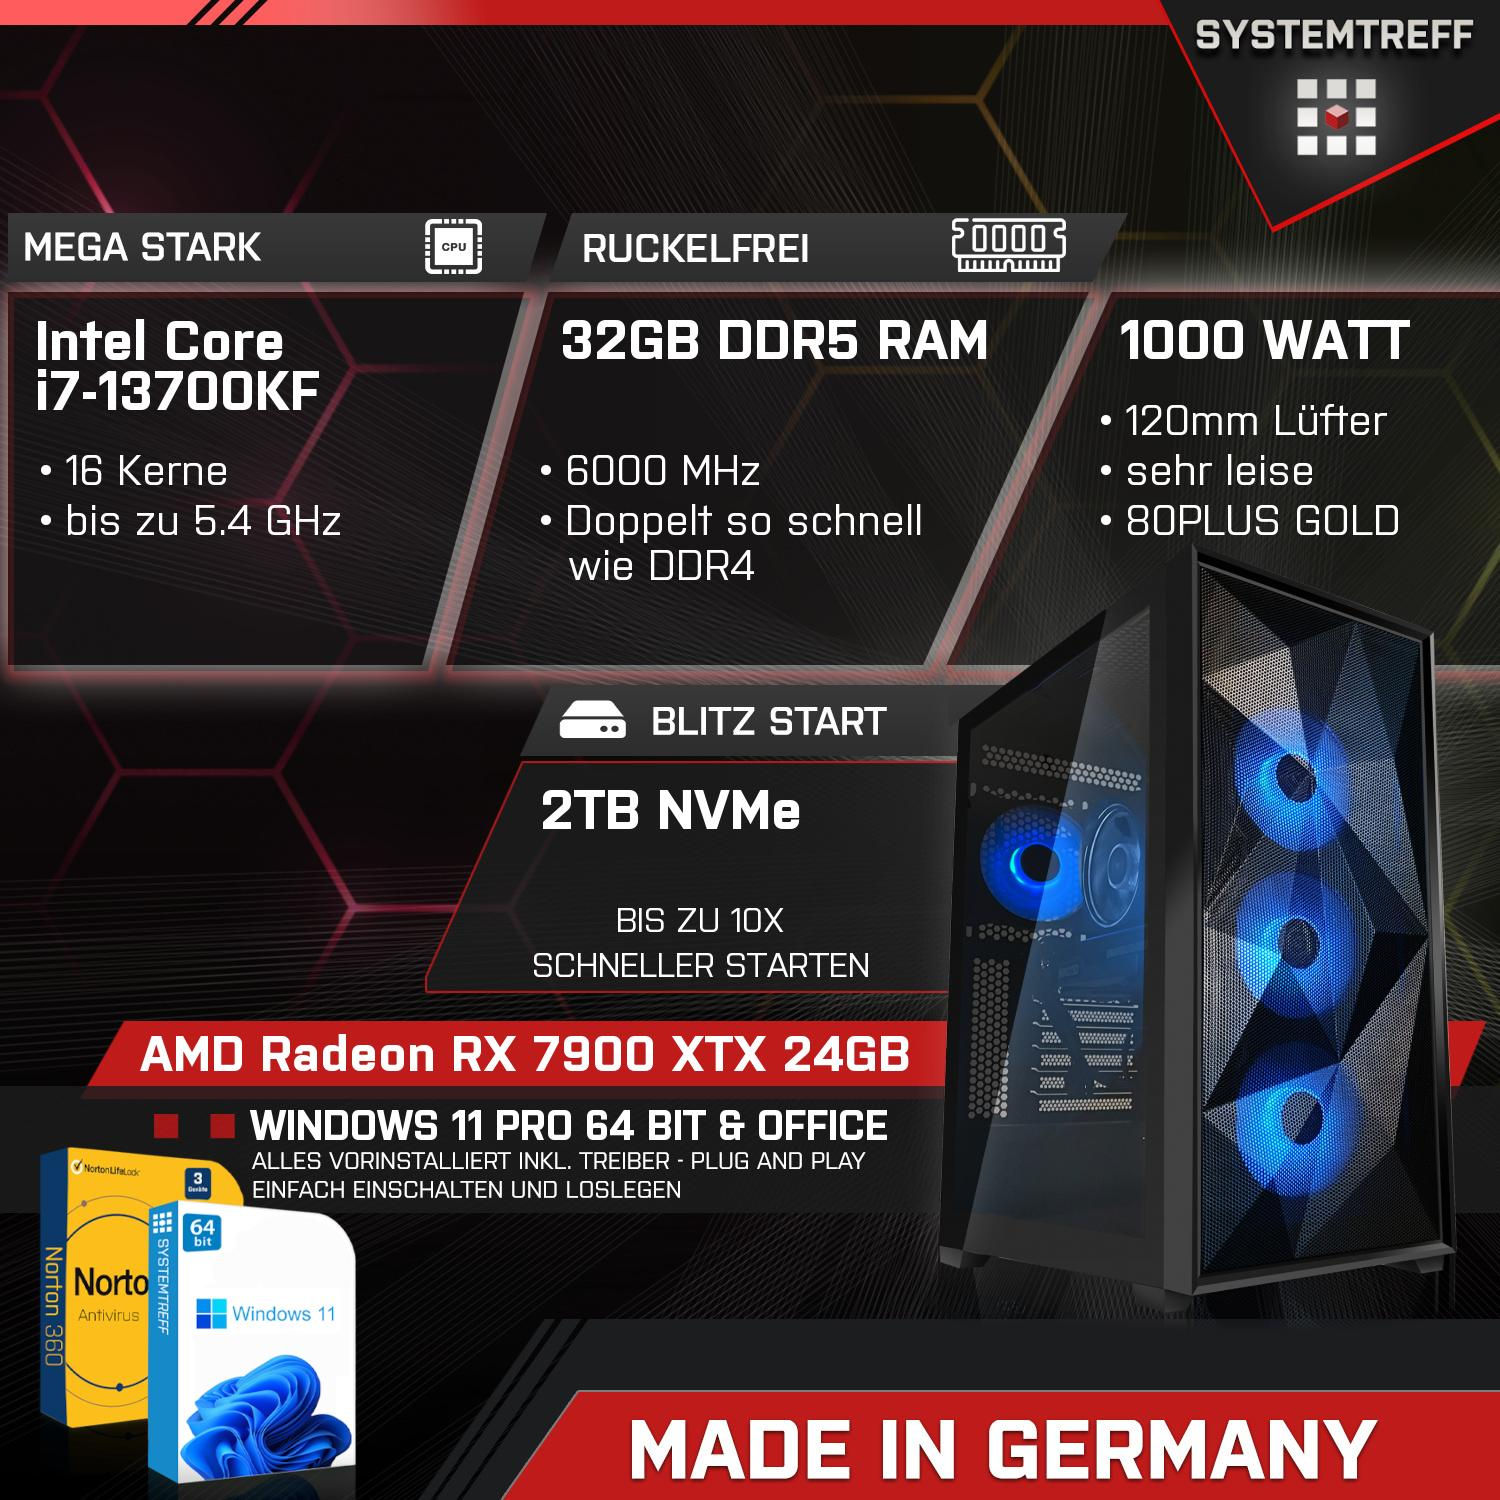 SYSTEMTREFF High-End Gaming Intel Core Core™ 11 Intel® i7 32 Windows RAM, Radeon™ 2000 Pro, Gaming mSSD, AMD Prozessor, RX XTX PC GB mit i7-13700KF, 7900 GB